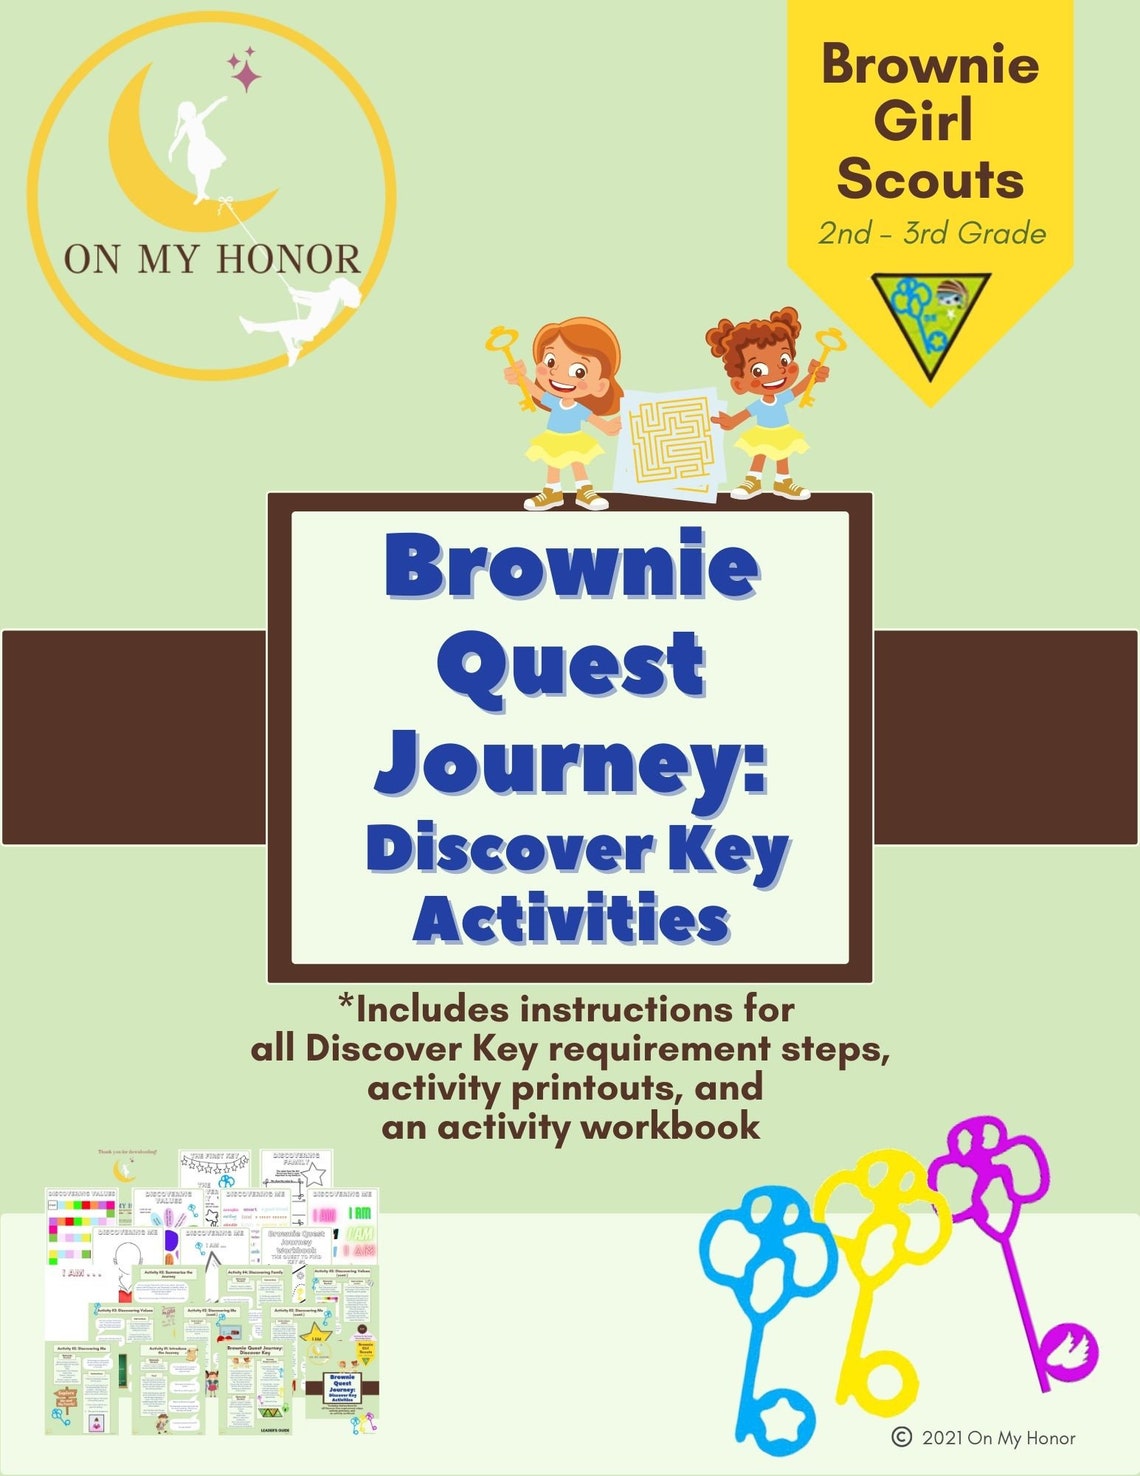 journey brownie quest